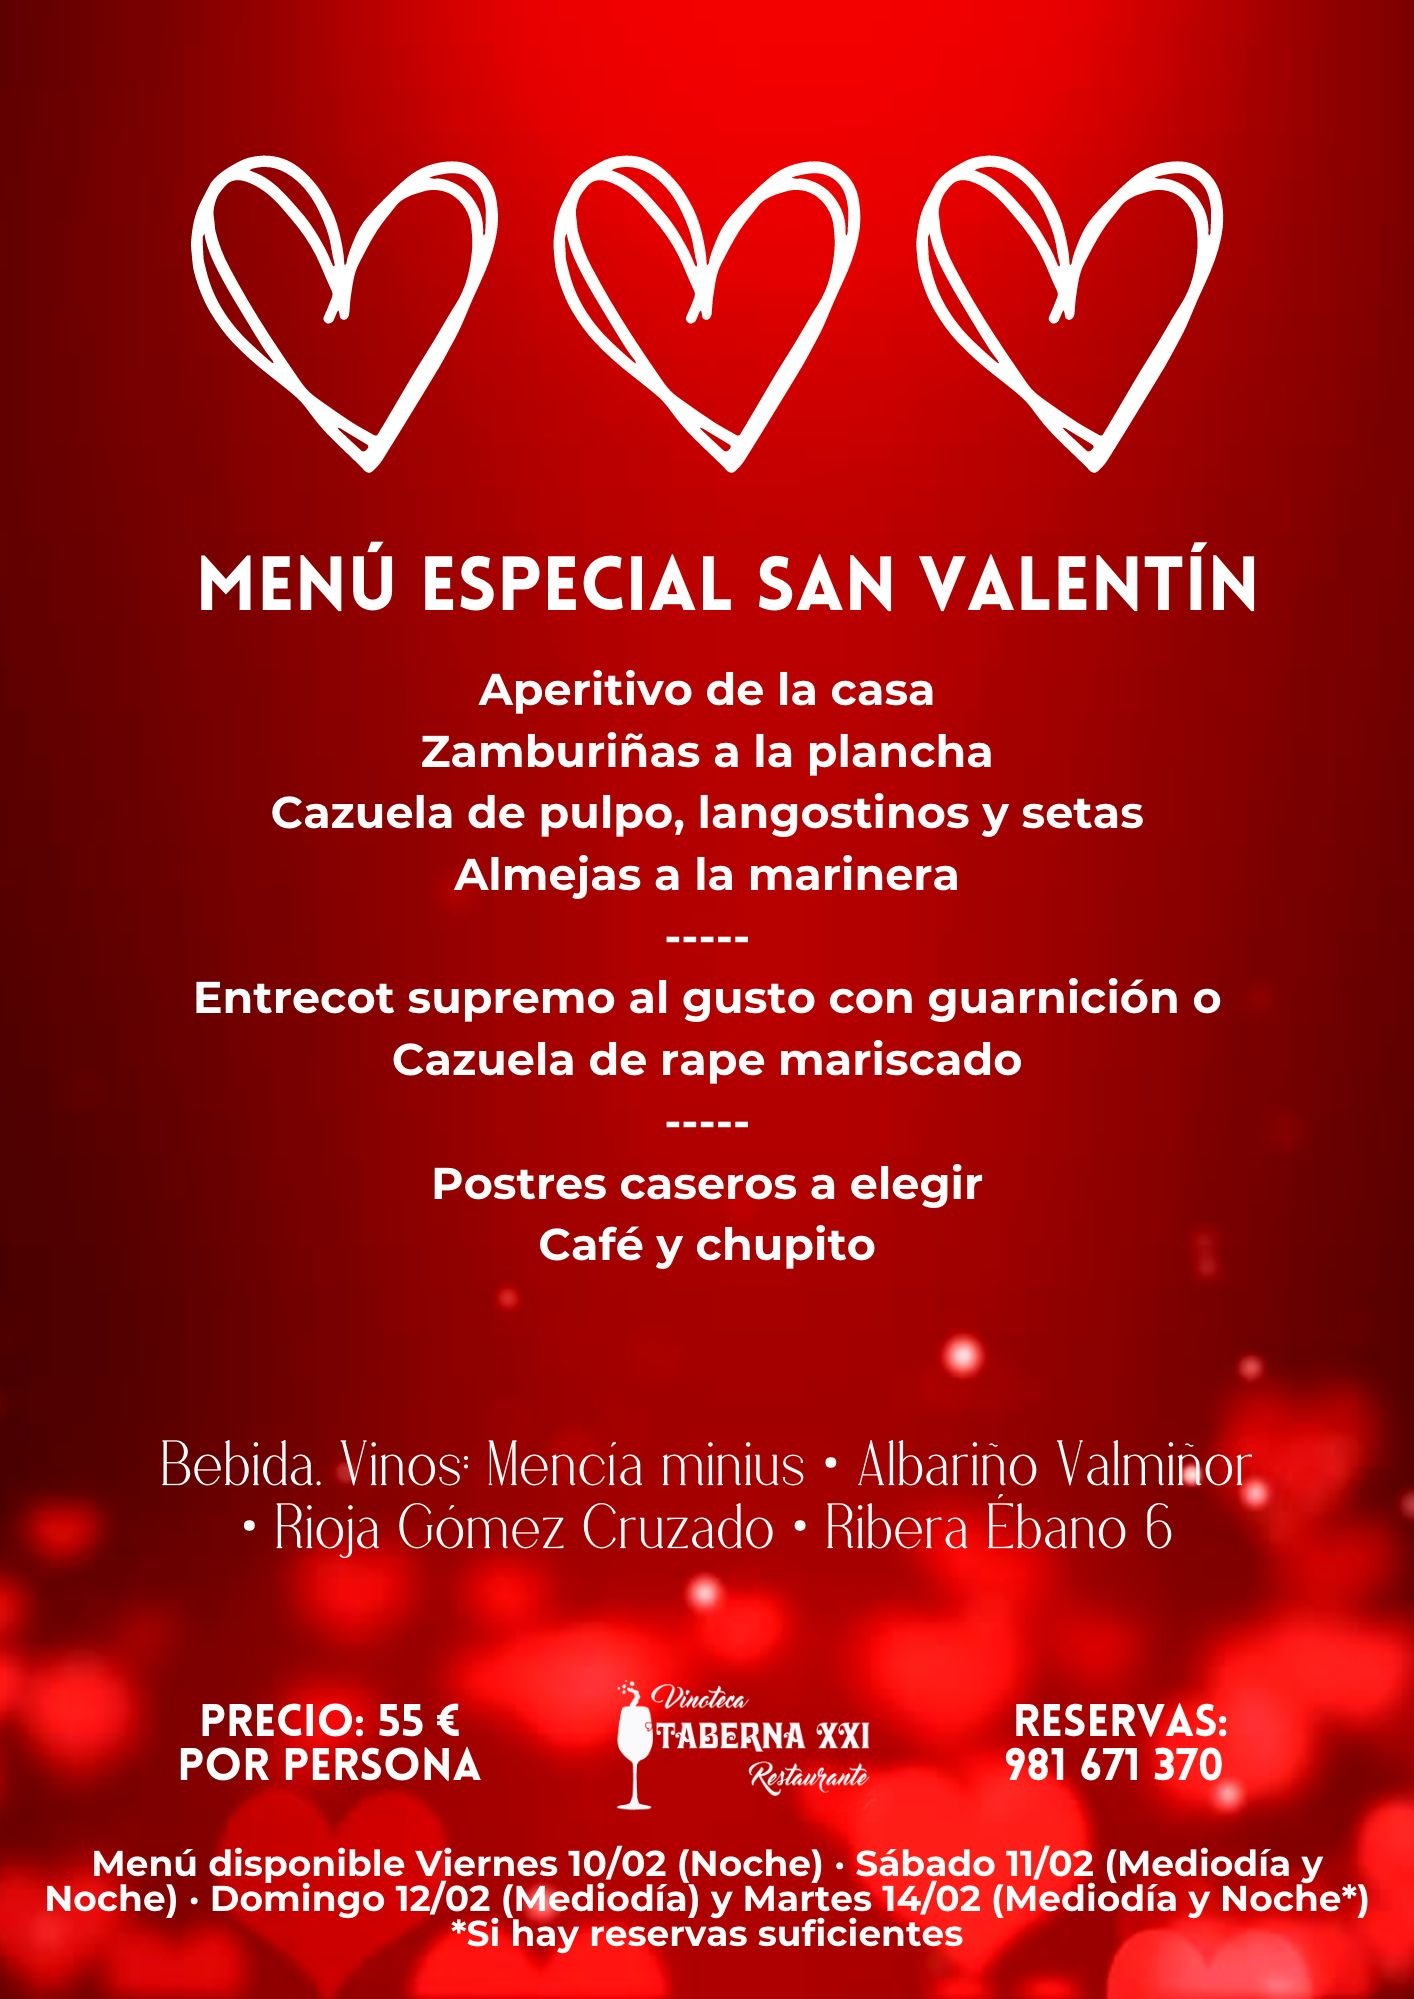 Menú especial San Valentín - Restaurante A Taberna XXI - Carral